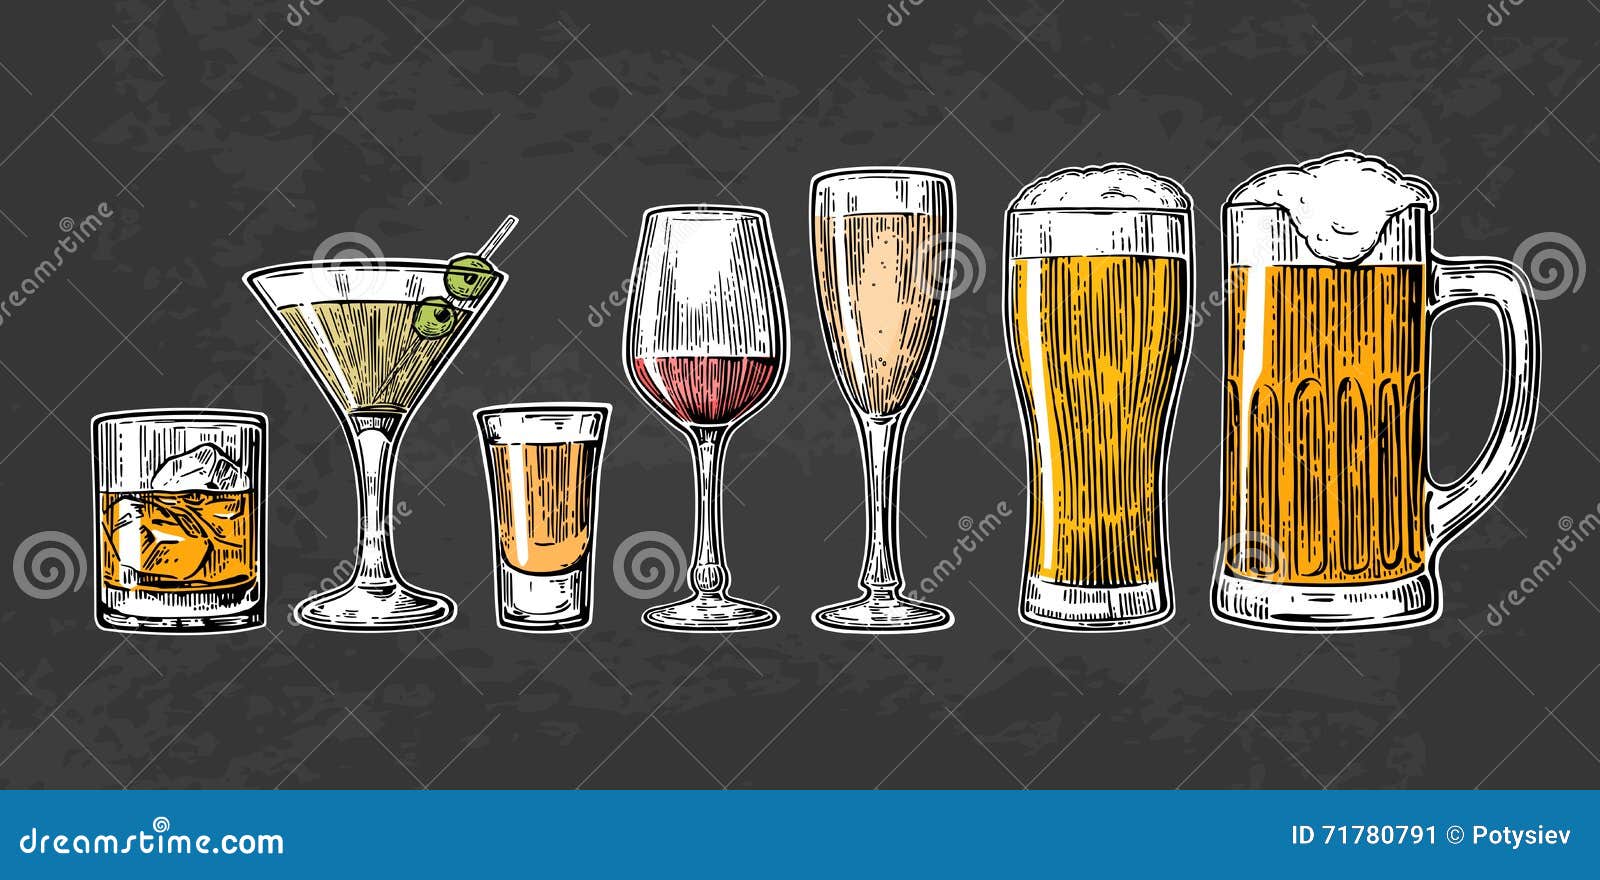 https://thumbs.dreamstime.com/z/set-glass-beer-whiskey-wine-tequila-cognac-champagne-cocktails-vector-engraved-illustration-isolated-dark-vintage-background-71780791.jpg